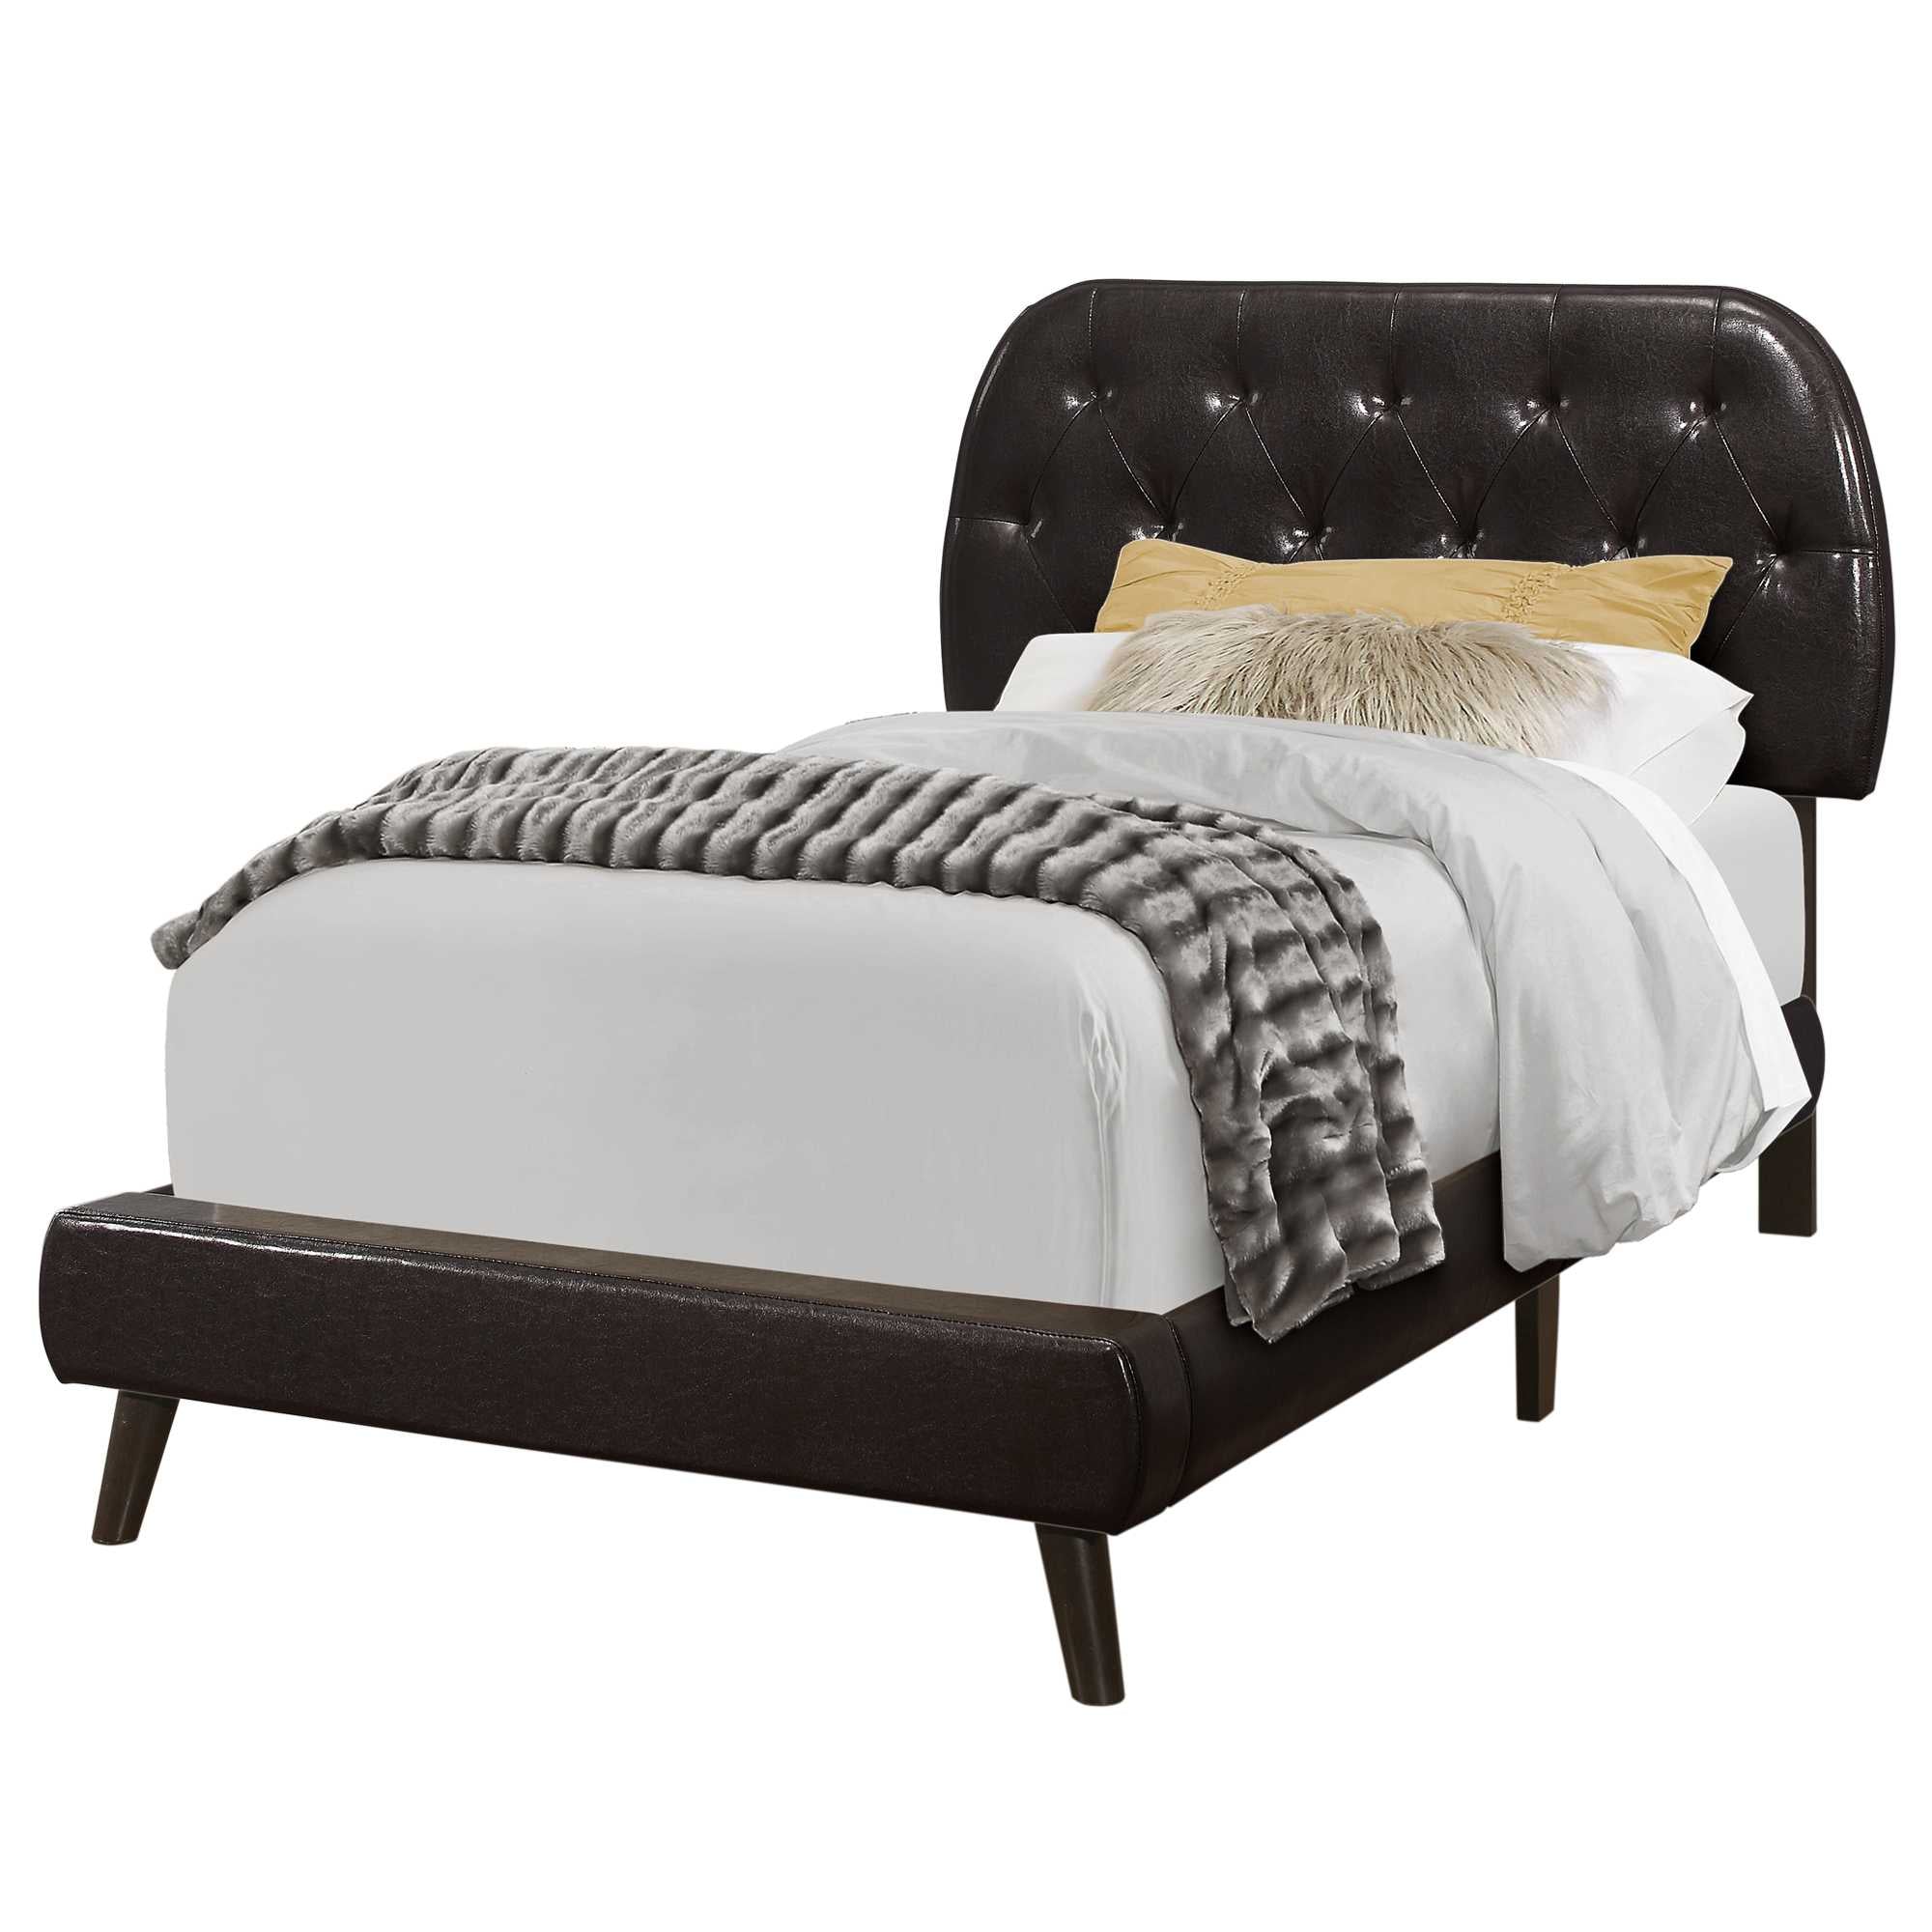 Tufted Black Standard Bed Upholstered With Headboard Default Title